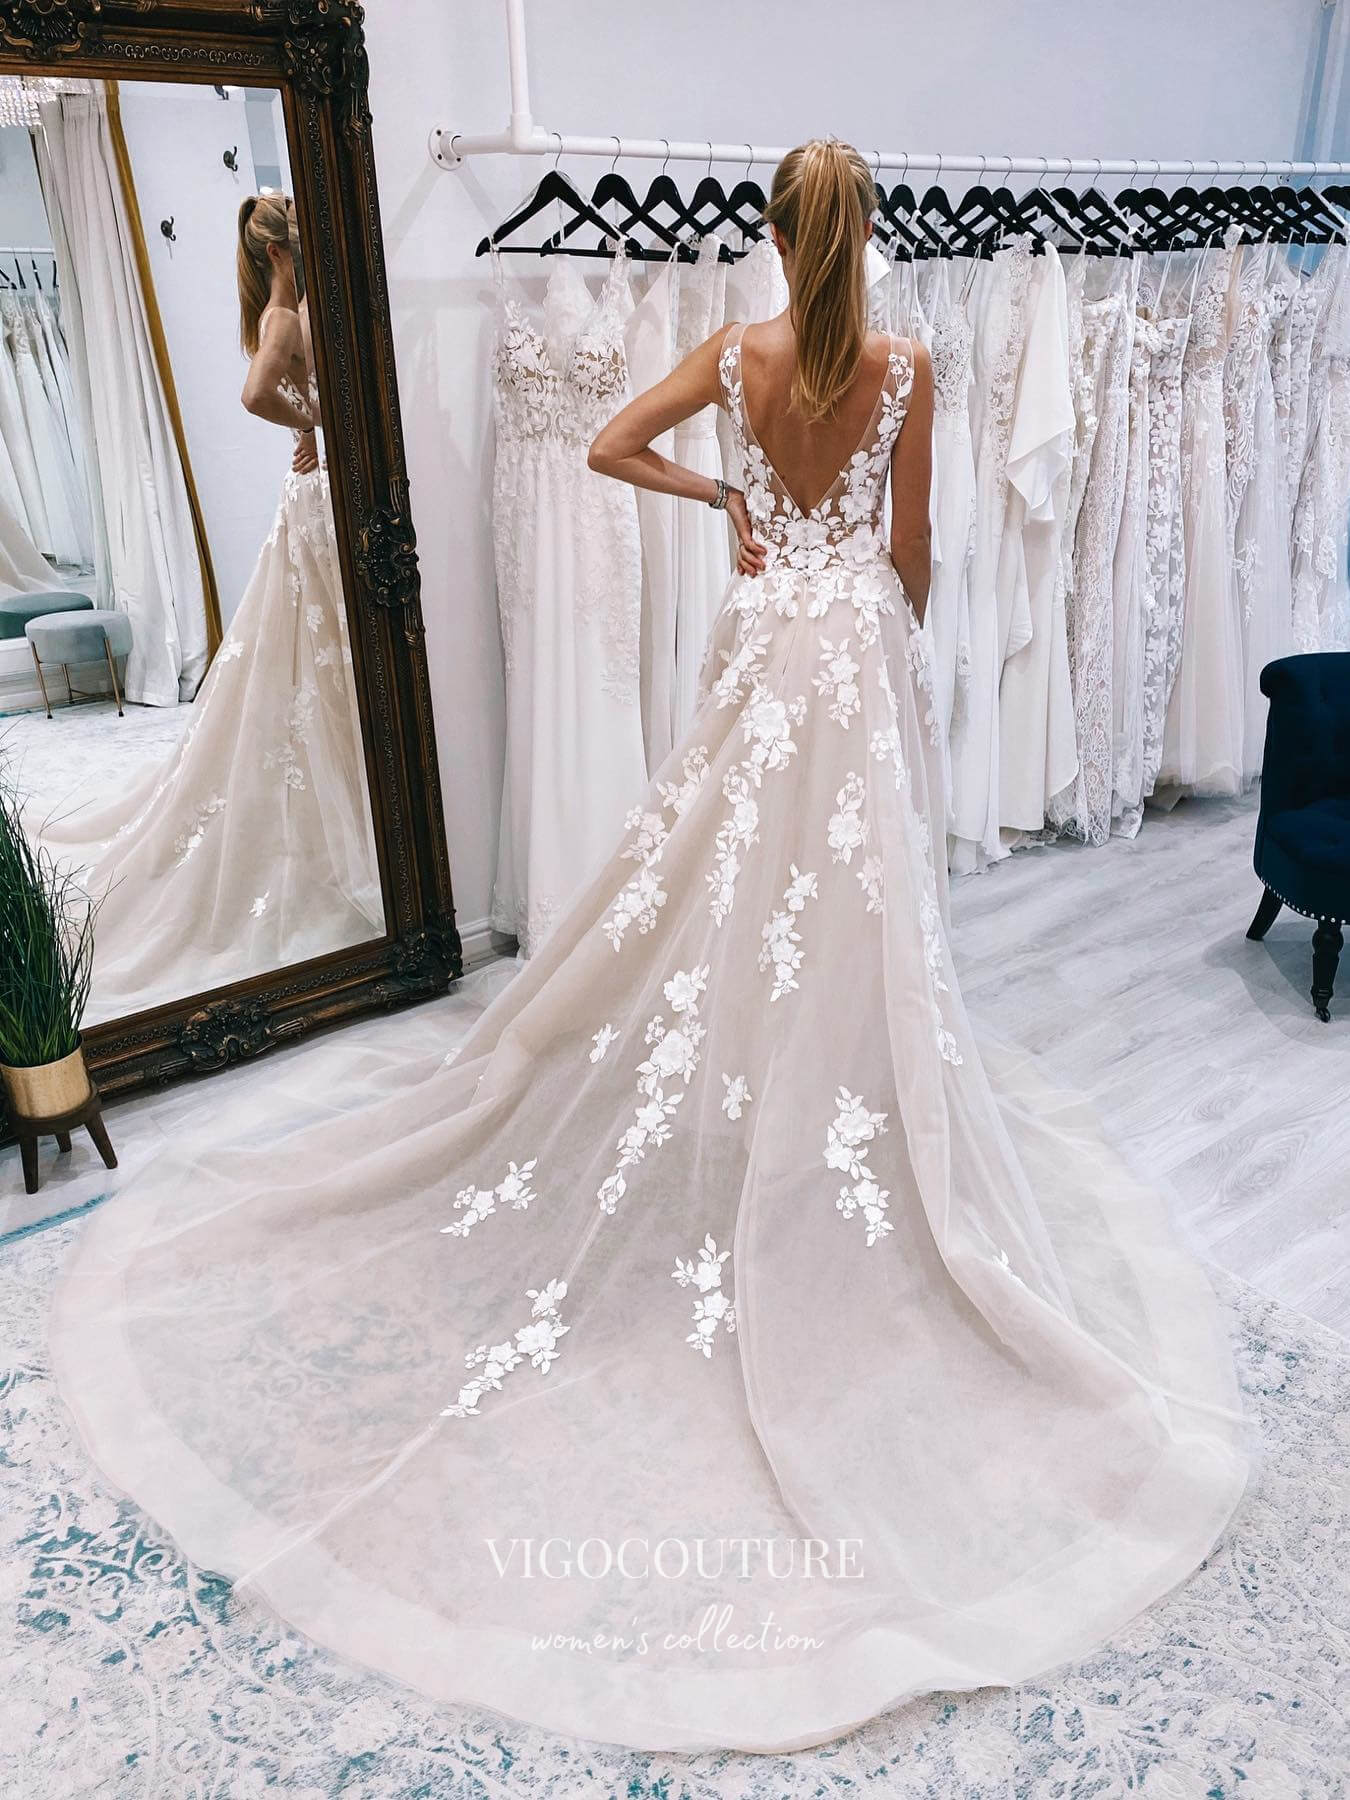 vigocouture-Lace Applique Plunging V-Neck Wedding Dresses A-Line Bridal Dresses W0075-Wedding Dresses-vigocouture-As Pictured-US2-